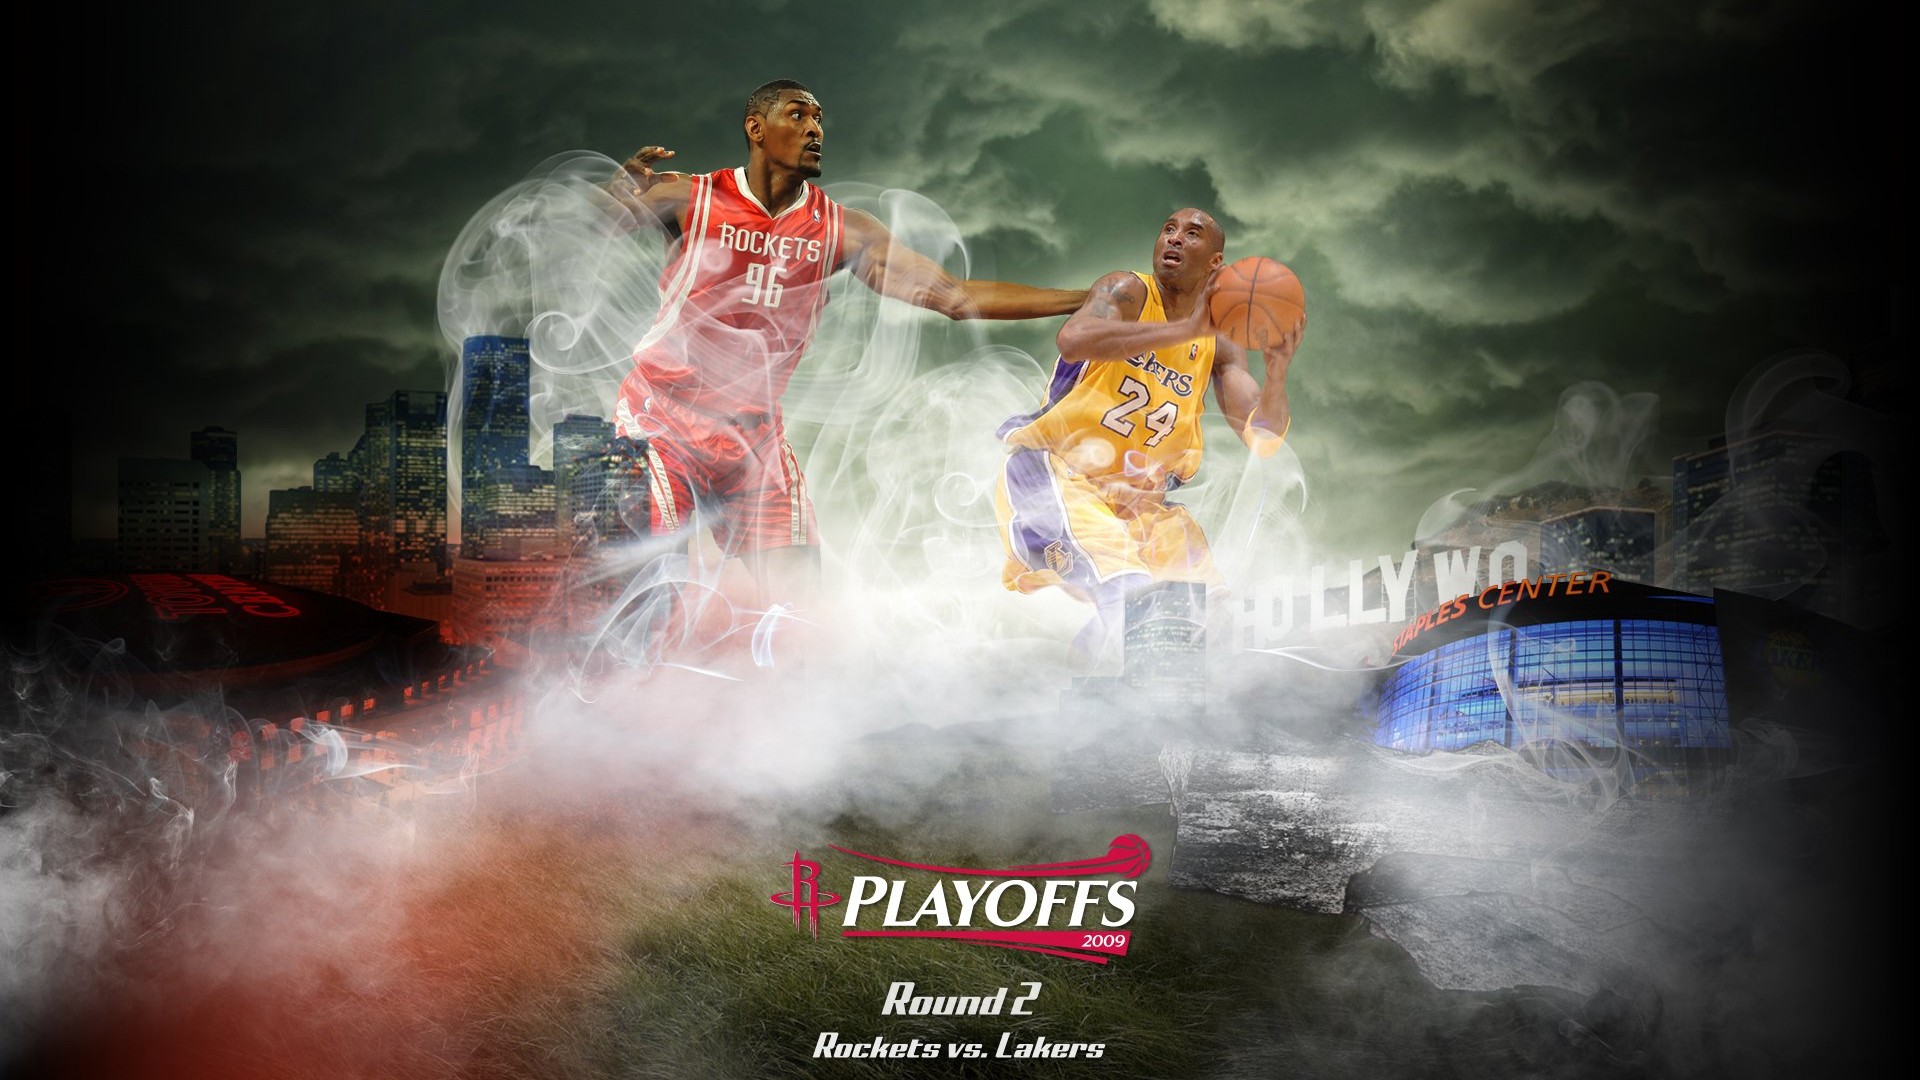 NBA Houston Rockets 2009 playoff wallpaper #2 - 1920x1080